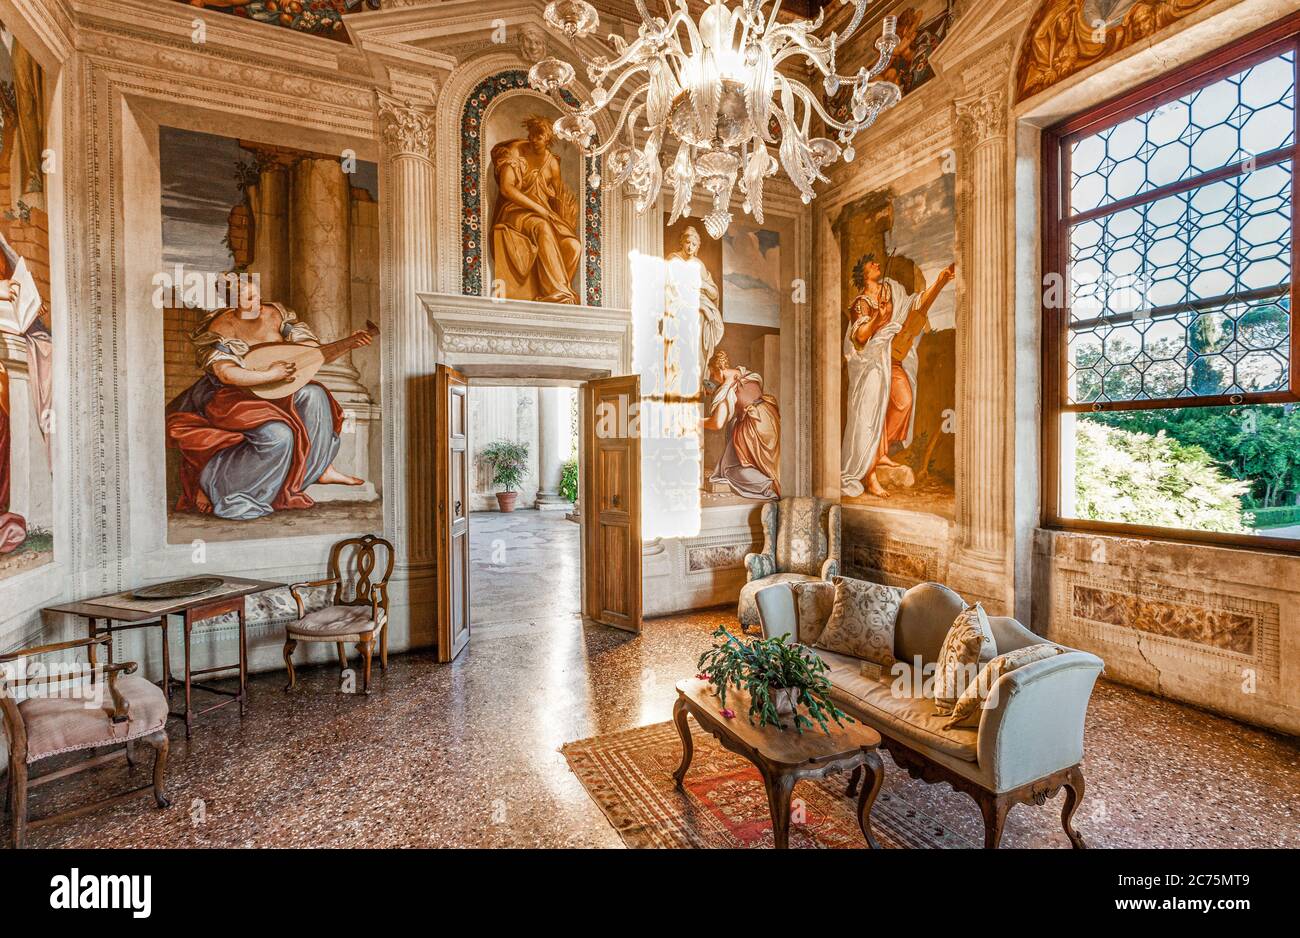 Italie Veneto - Fanzolo - Villa Emo - Andrea Palladio architecte - le Hall des Arts - fresques de Battista Zelotti Banque D'Images